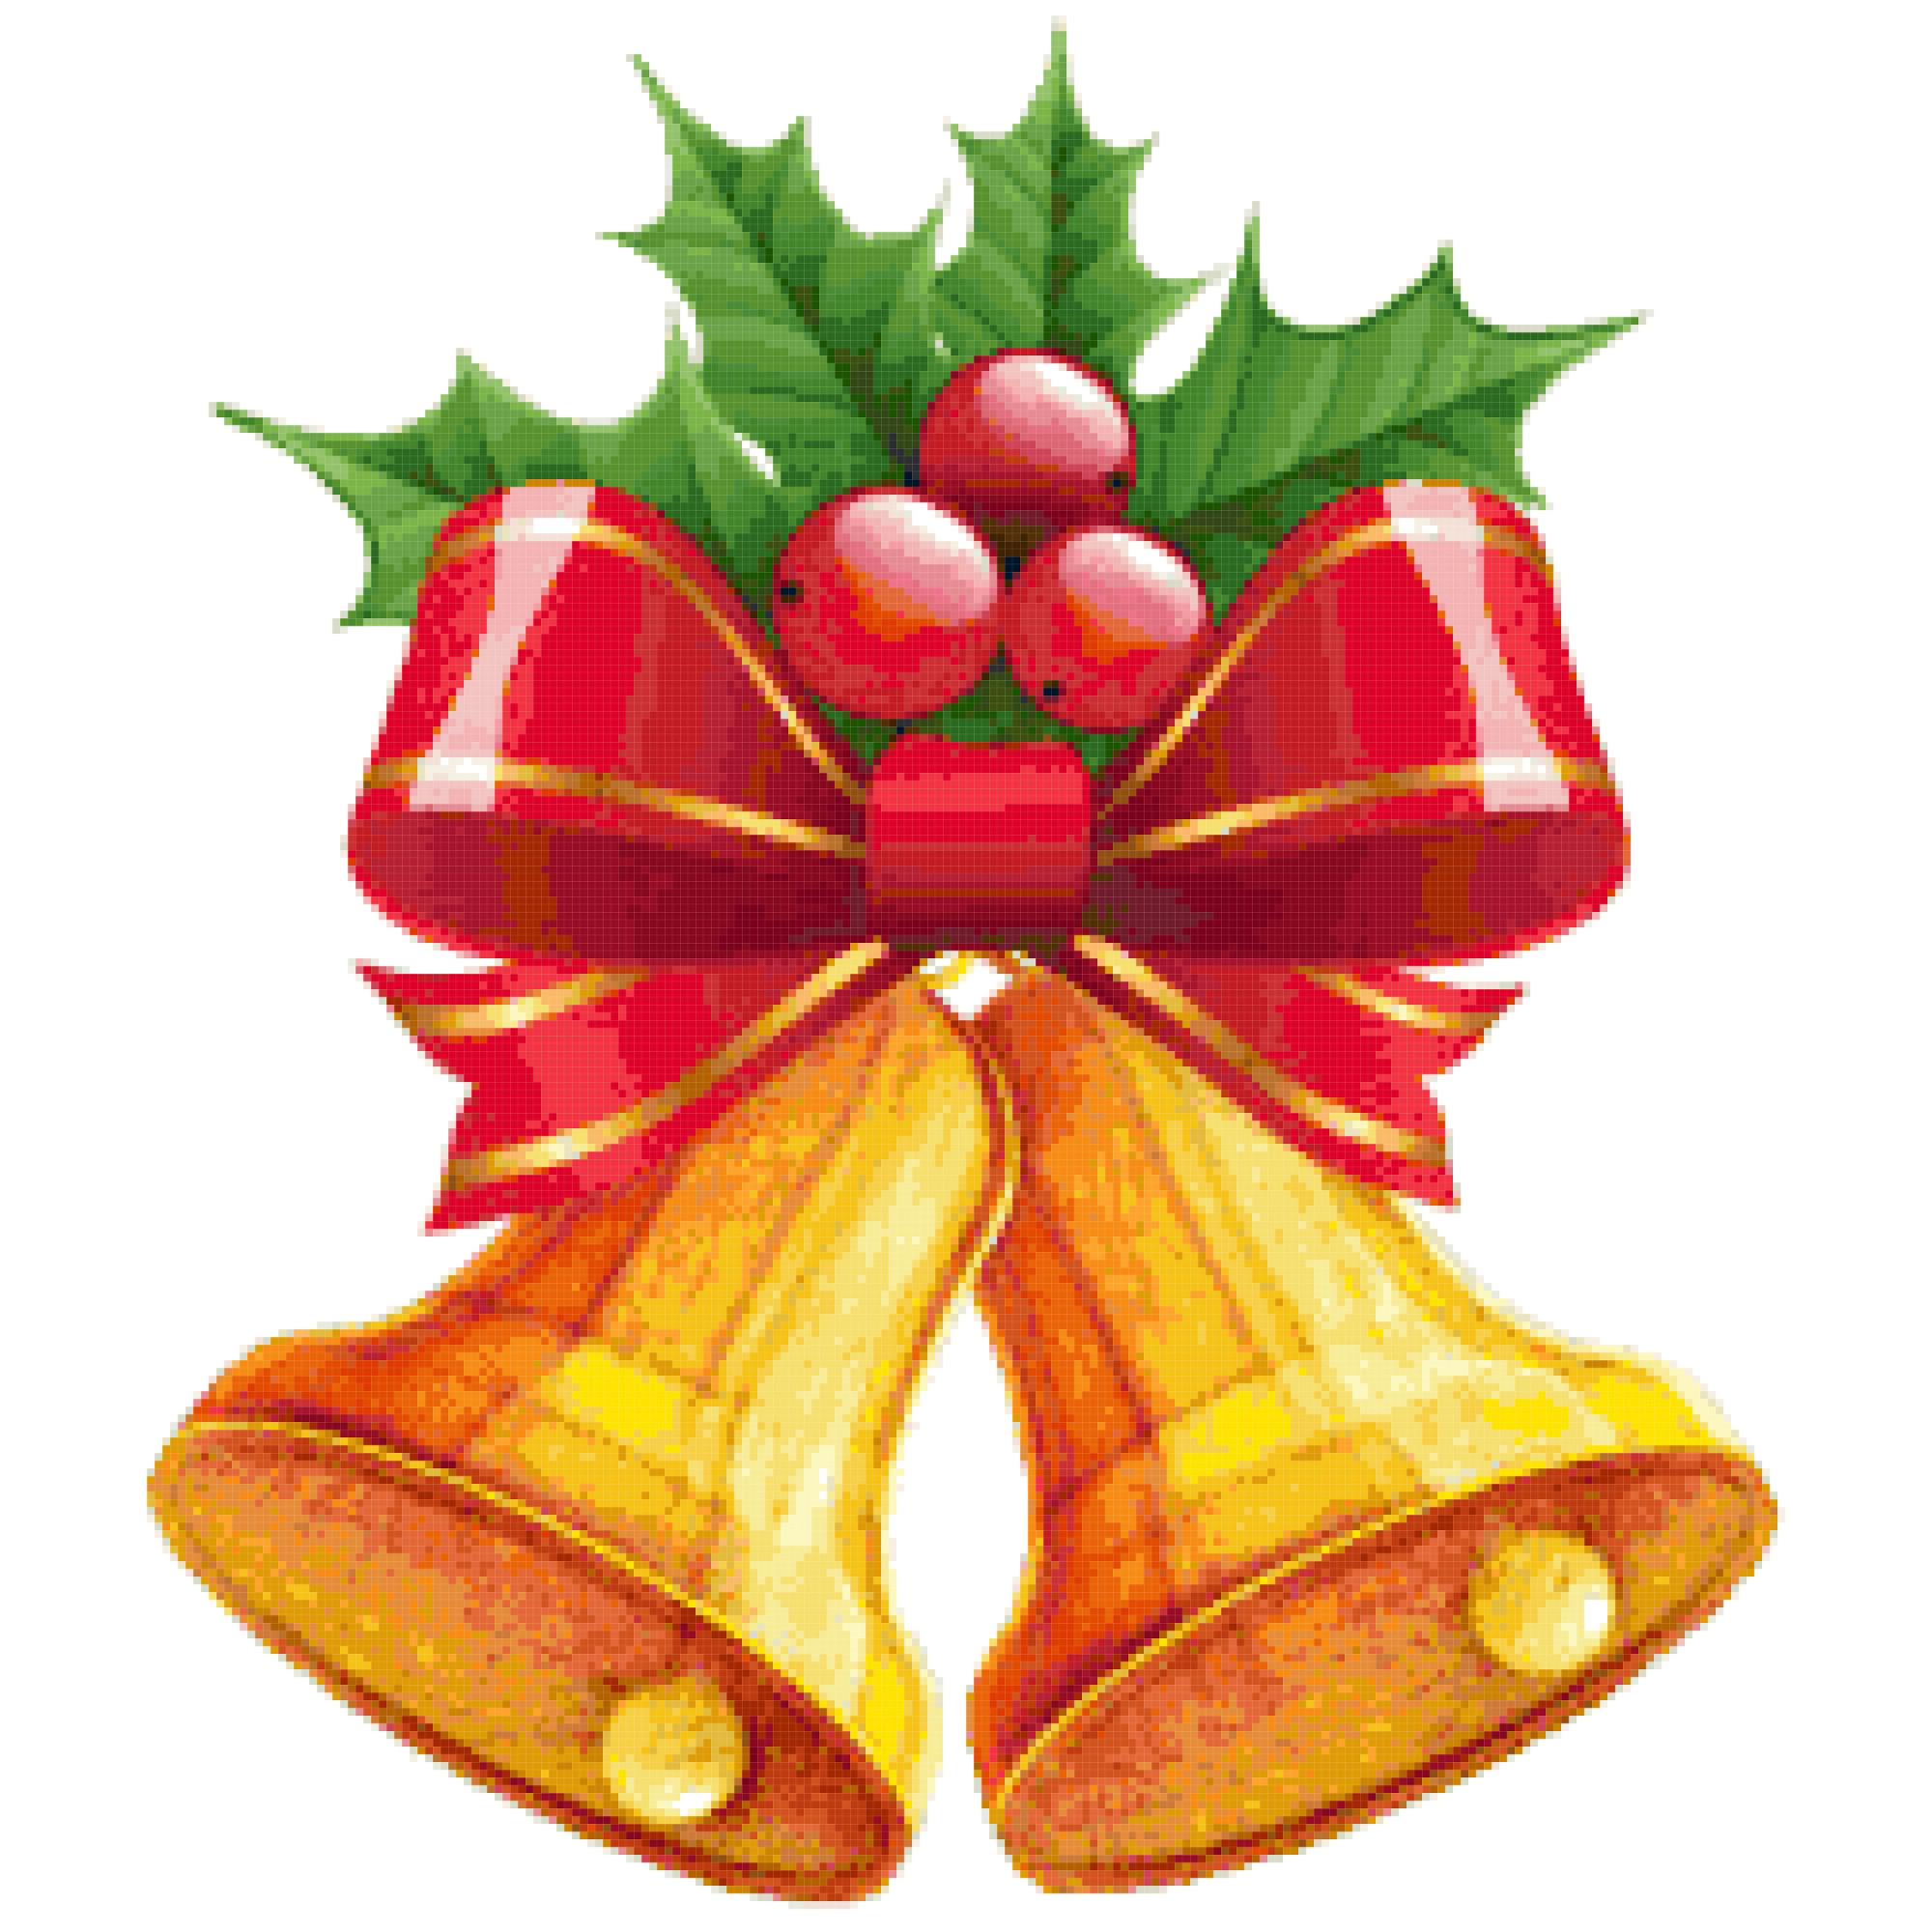 Merry Christmas cross stitch image